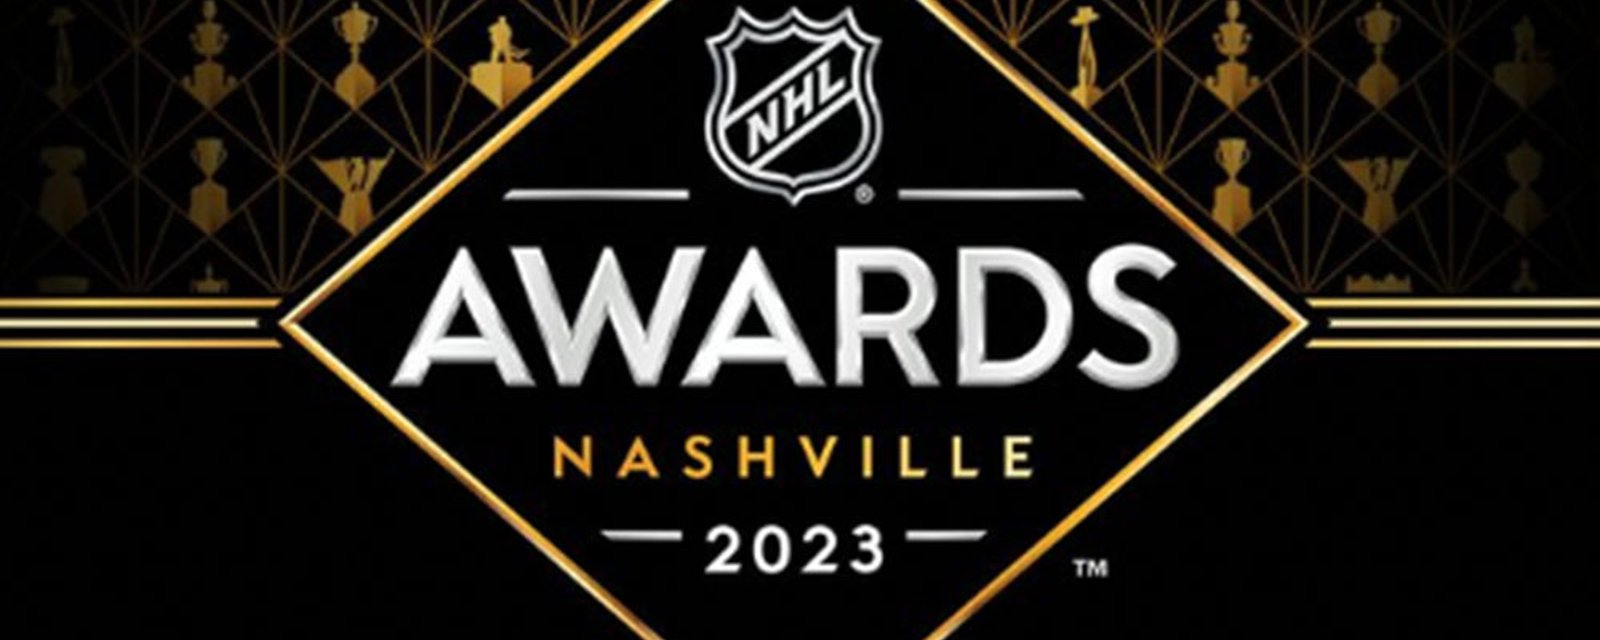 Full recap of all the winners from tonight's NHL Awards ceremony